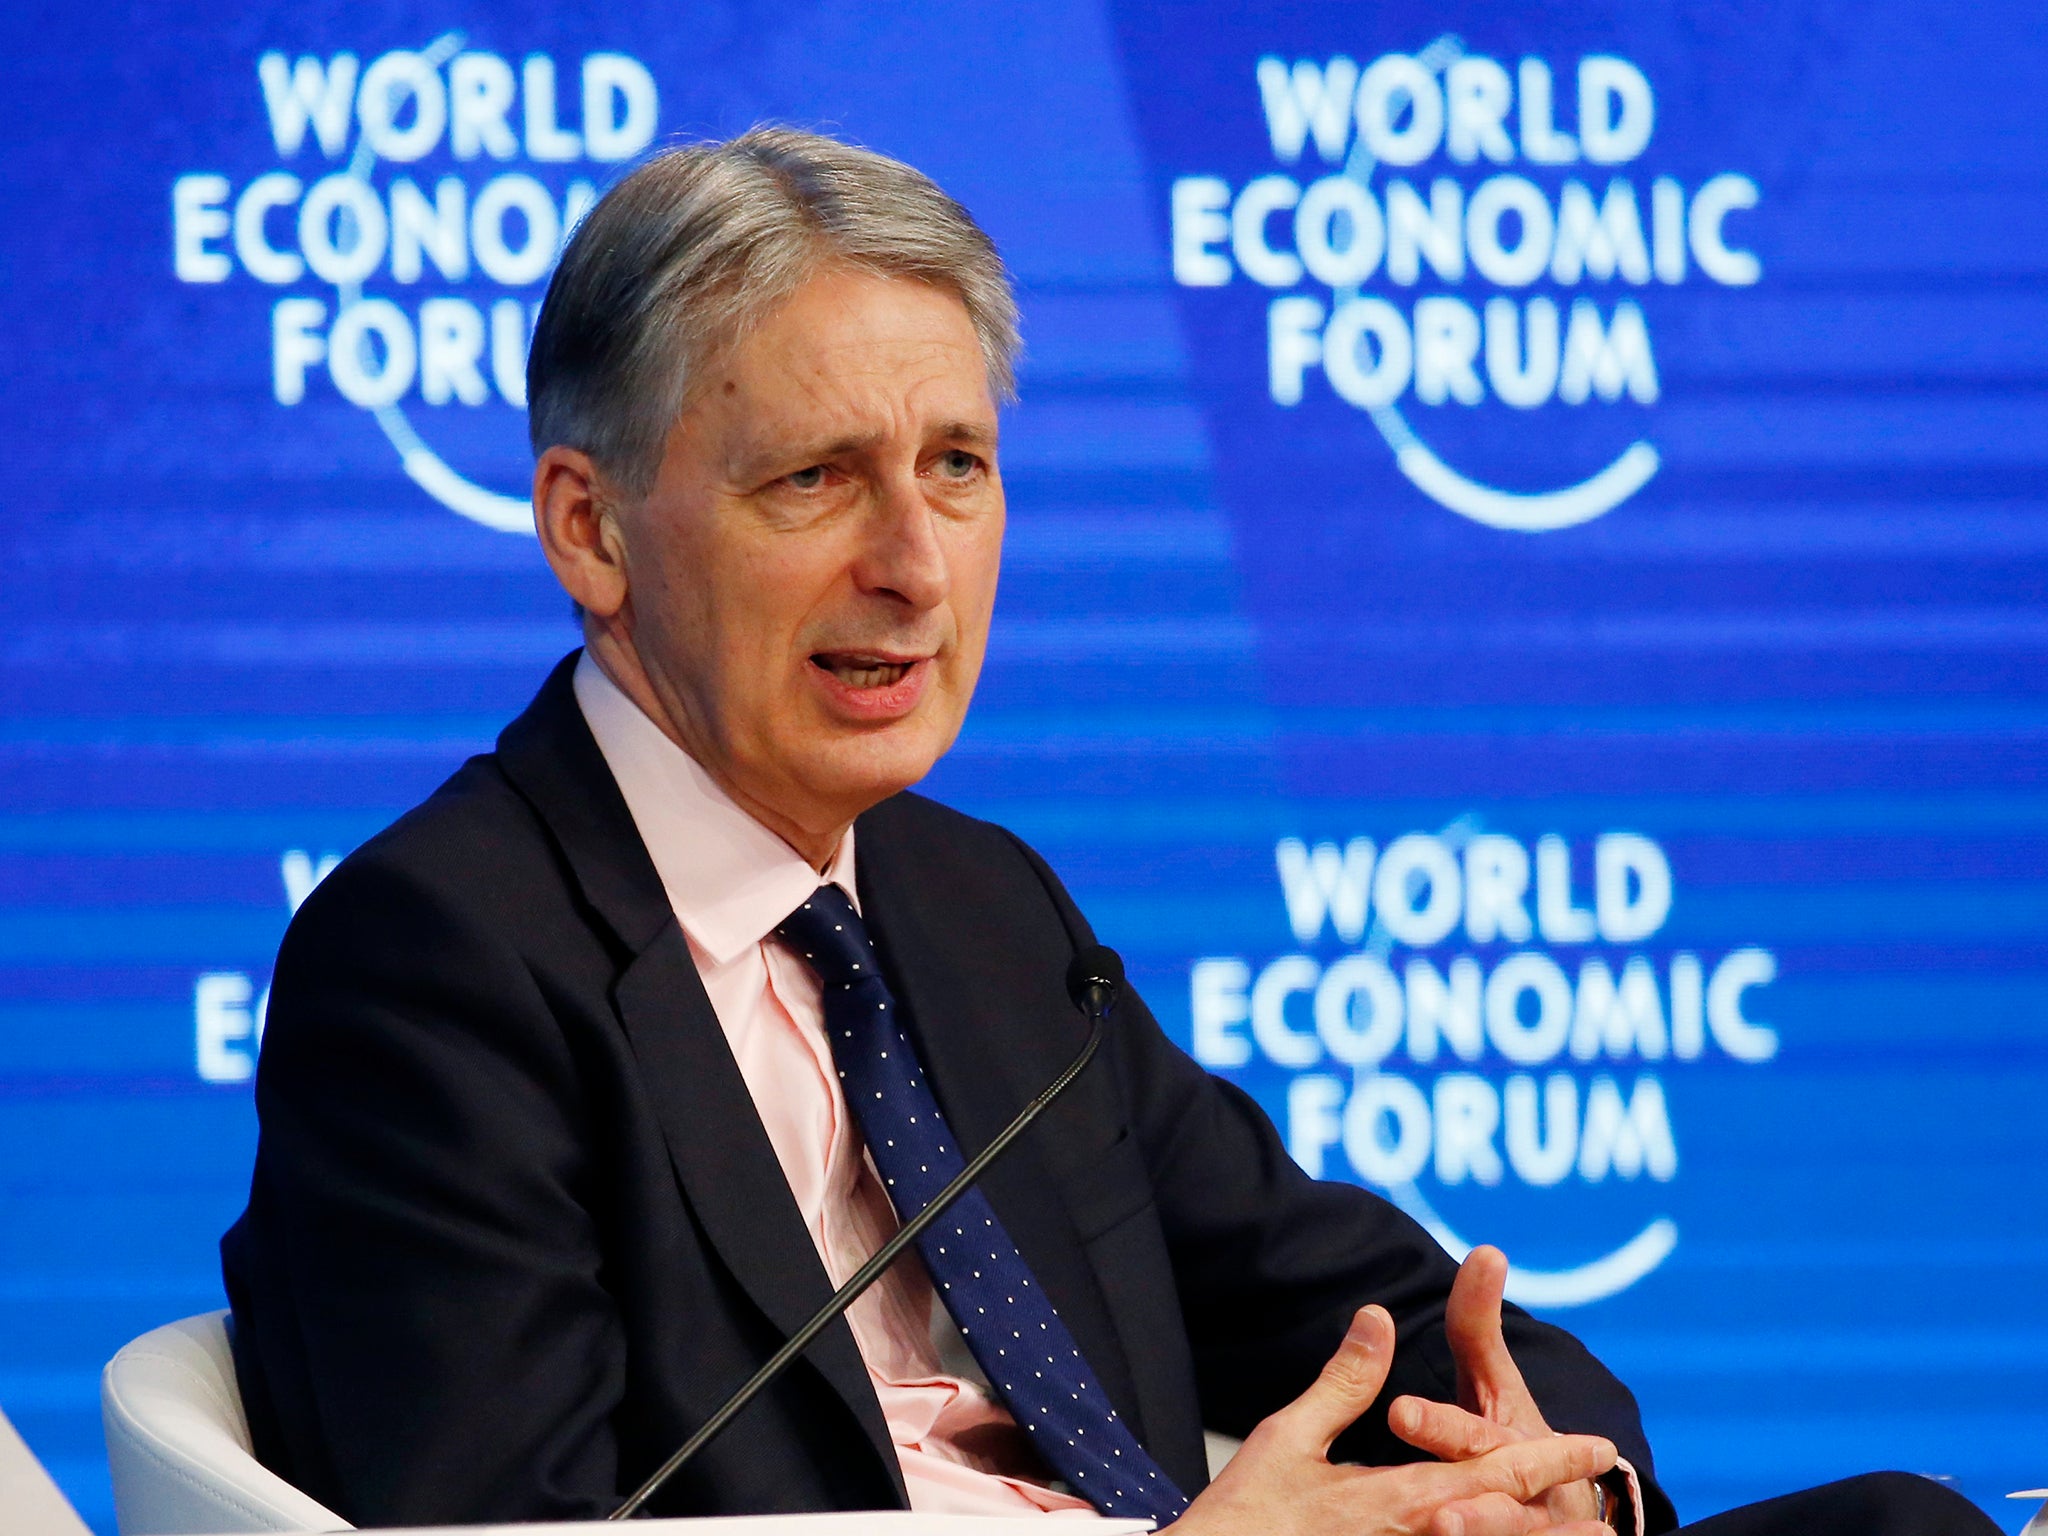 Chancellor Philip Hammond attends the World Economic Forum annual meeting in Davos, Switzerland